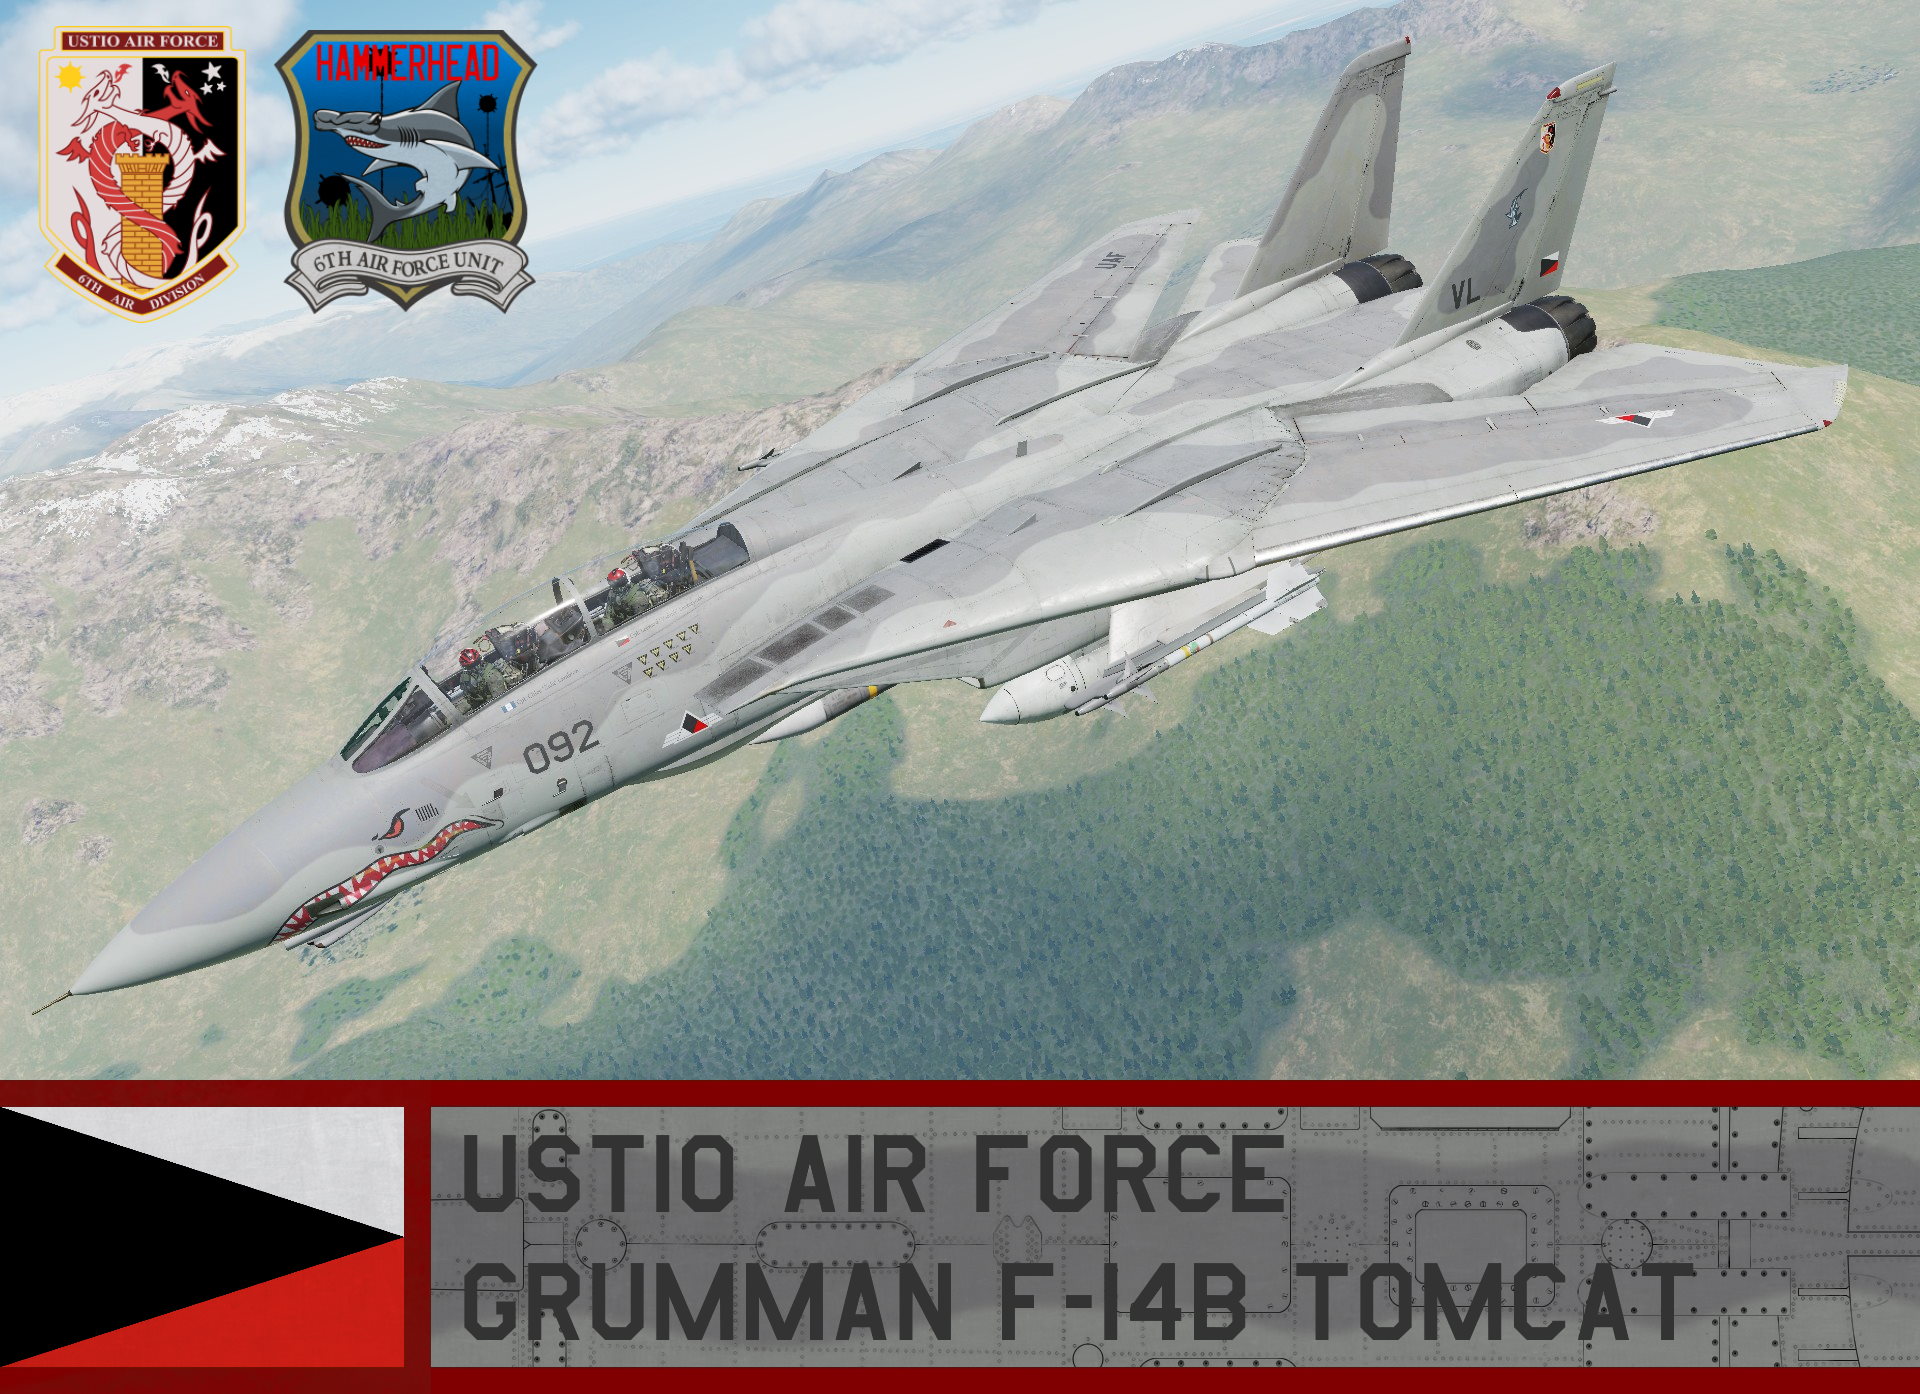 Ustio Air Force F-14B Tomcat - Ace Combat Zero (6th AFU) *UPDATED*